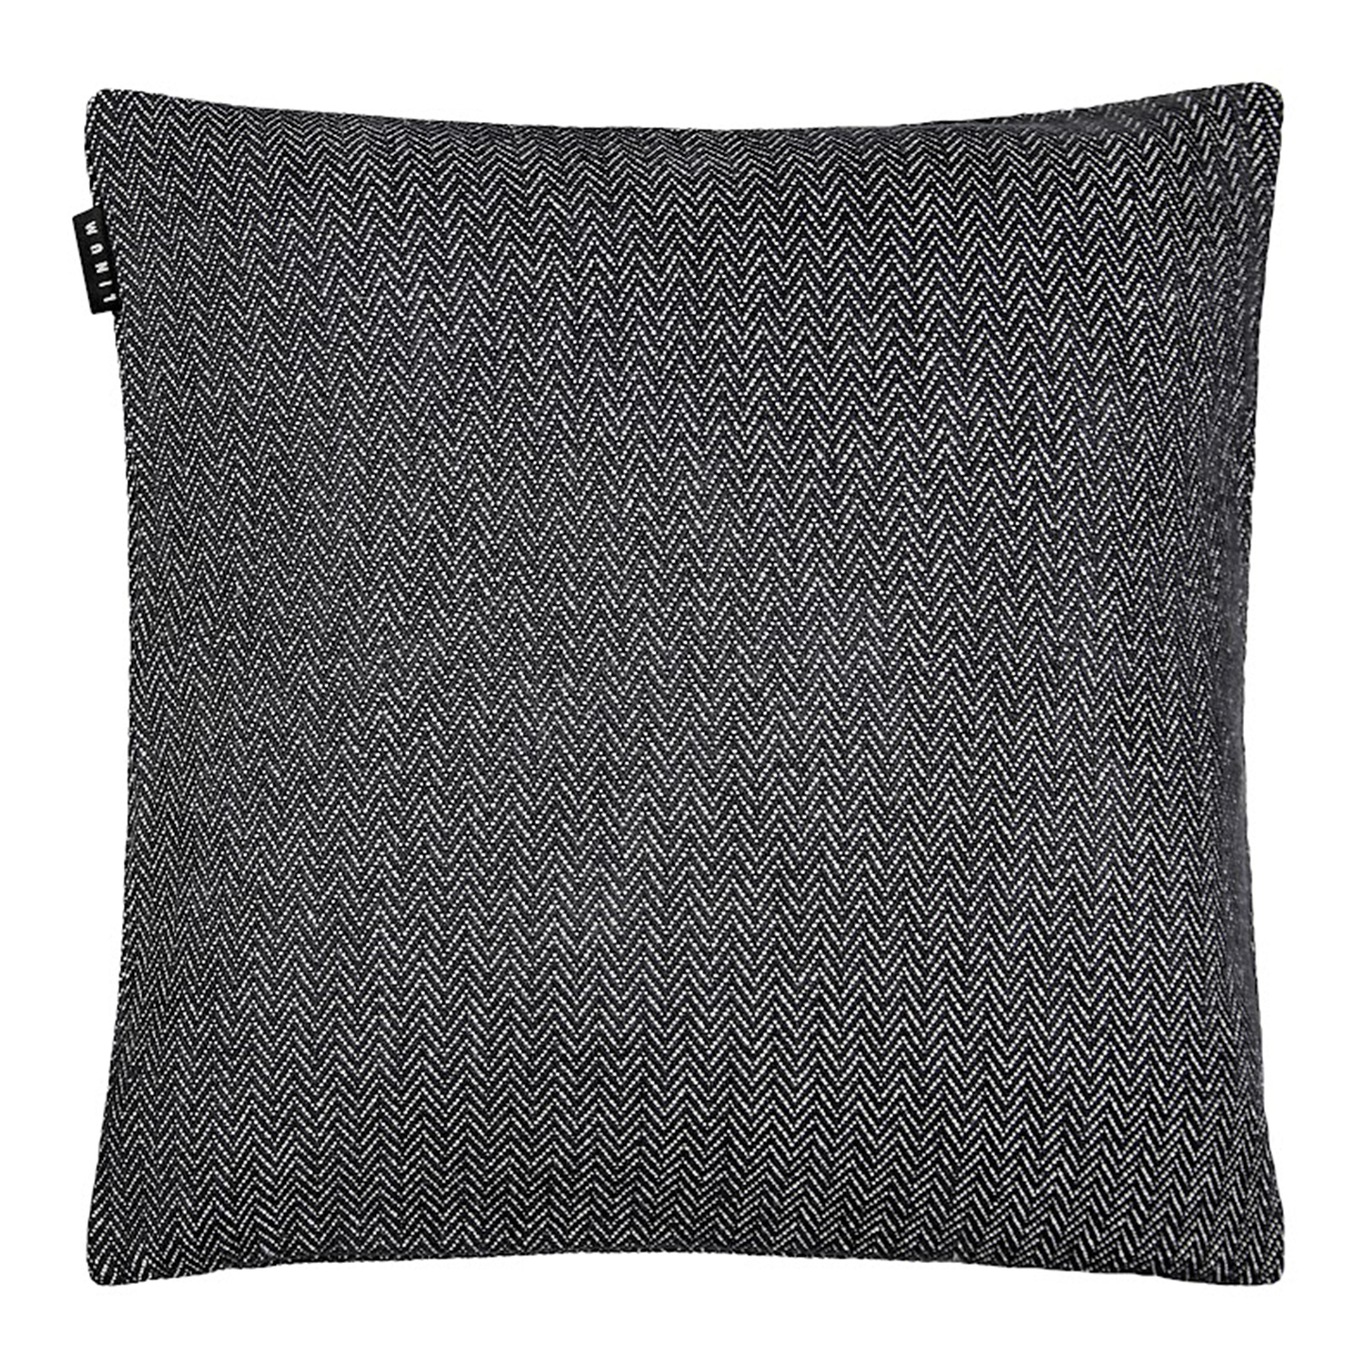 Shepard Cushion Cover 50x50 cm, Black